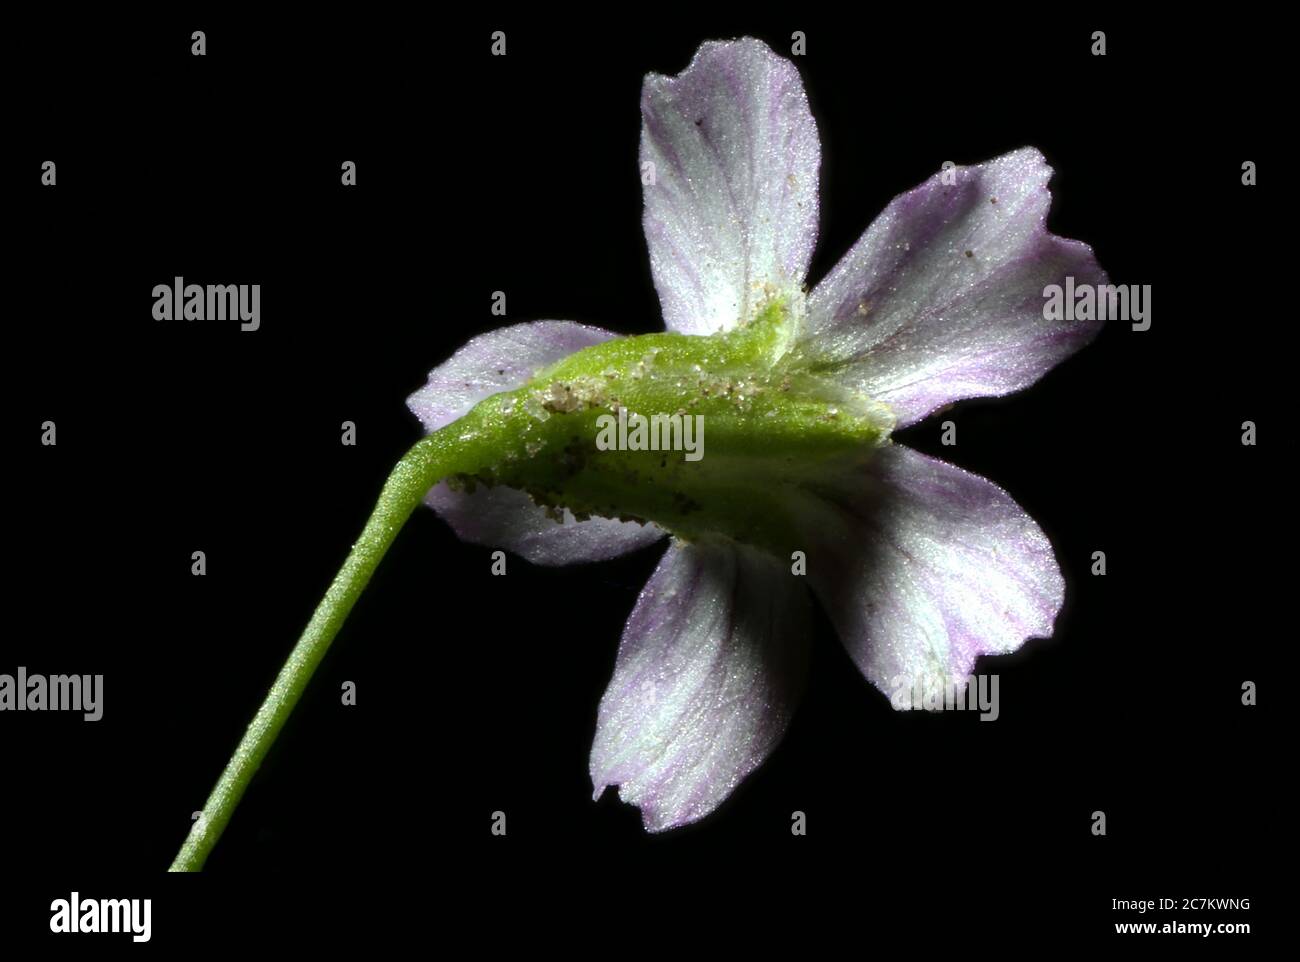 Annual Gypsophila (Gypsophila muralis). Flower Closeup Stock Photo